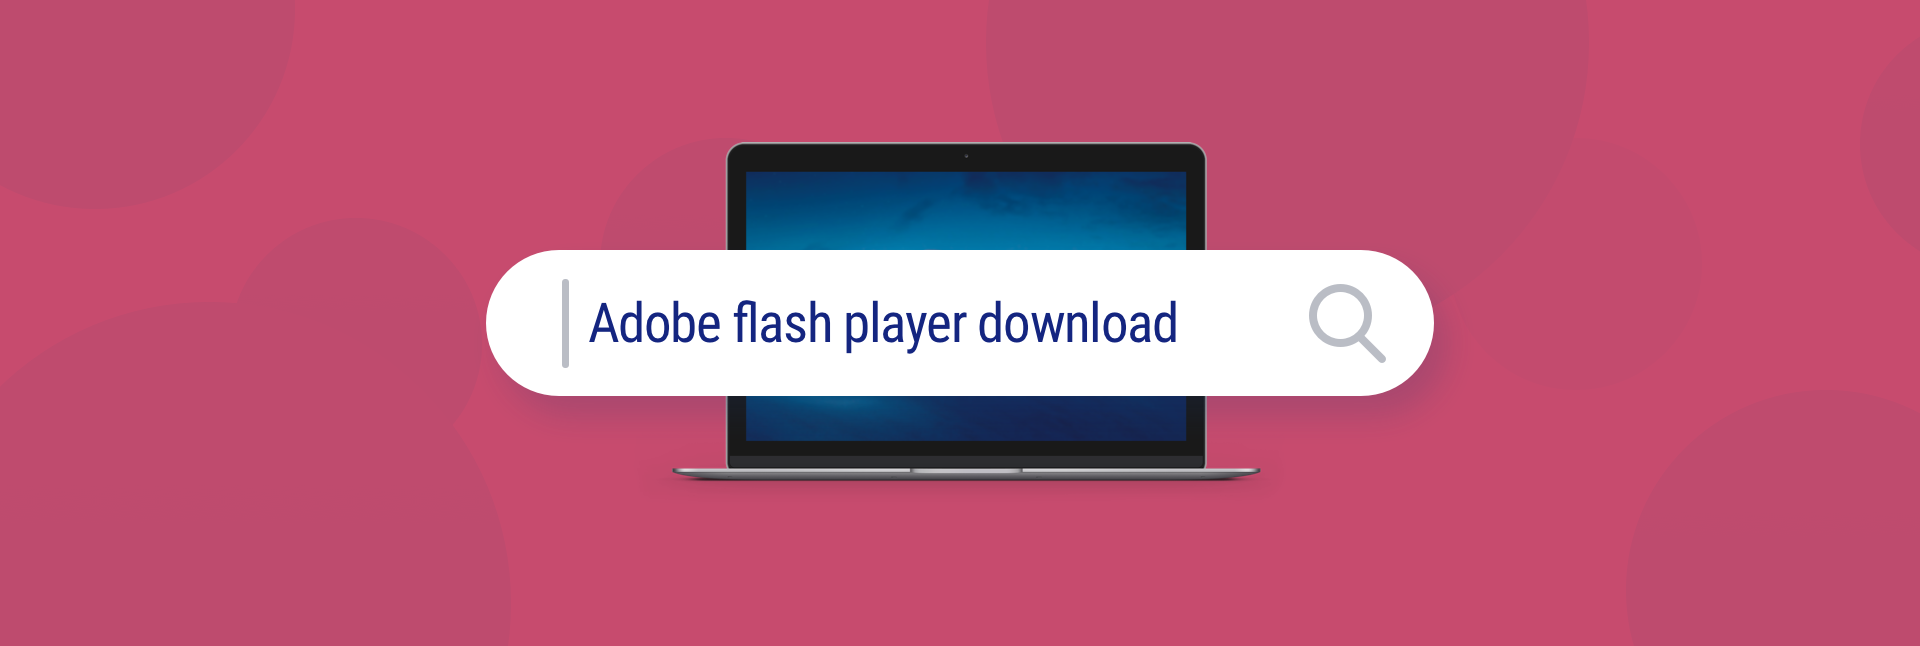 adobe flash player for mac os x 10.7